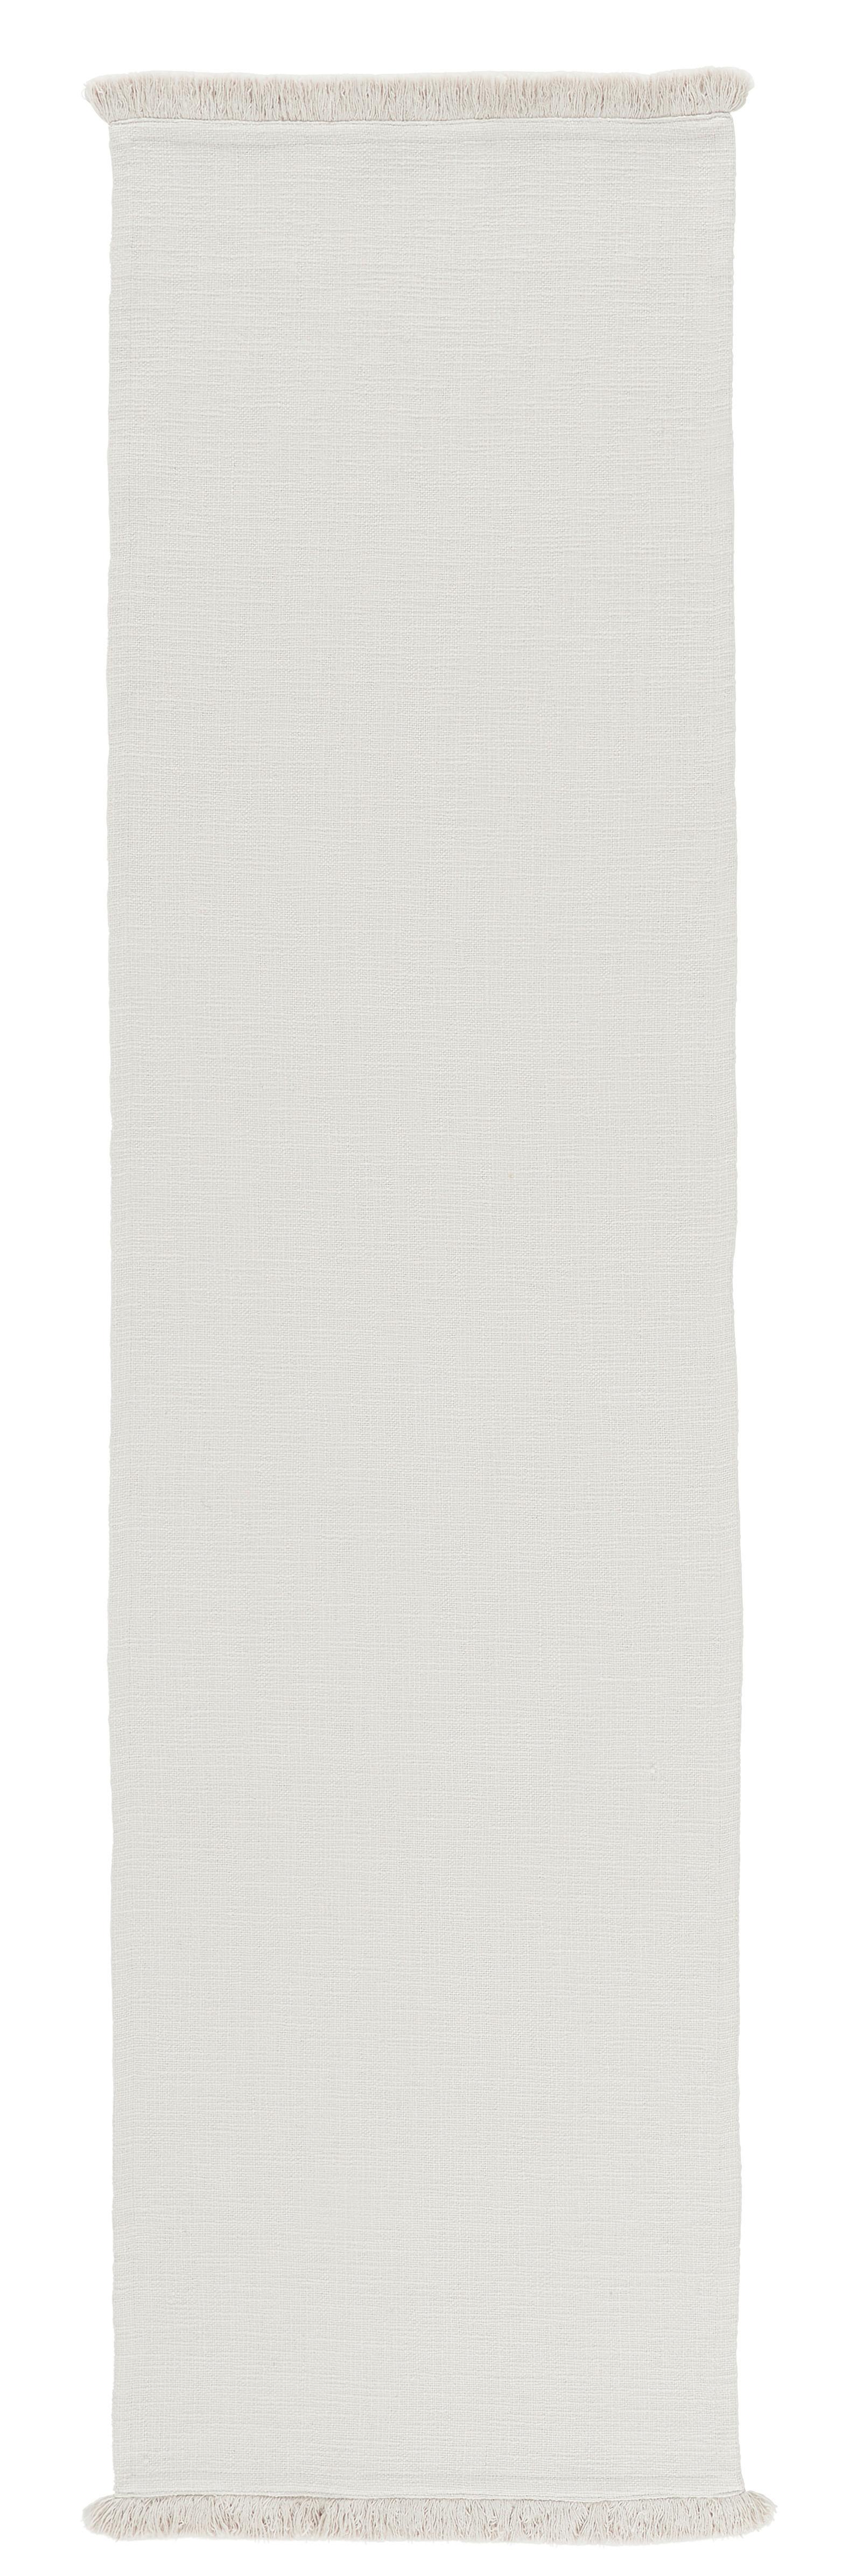 Asztali Futó Pablo - Natúr, modern, Textil (45/170cm) - Premium Living